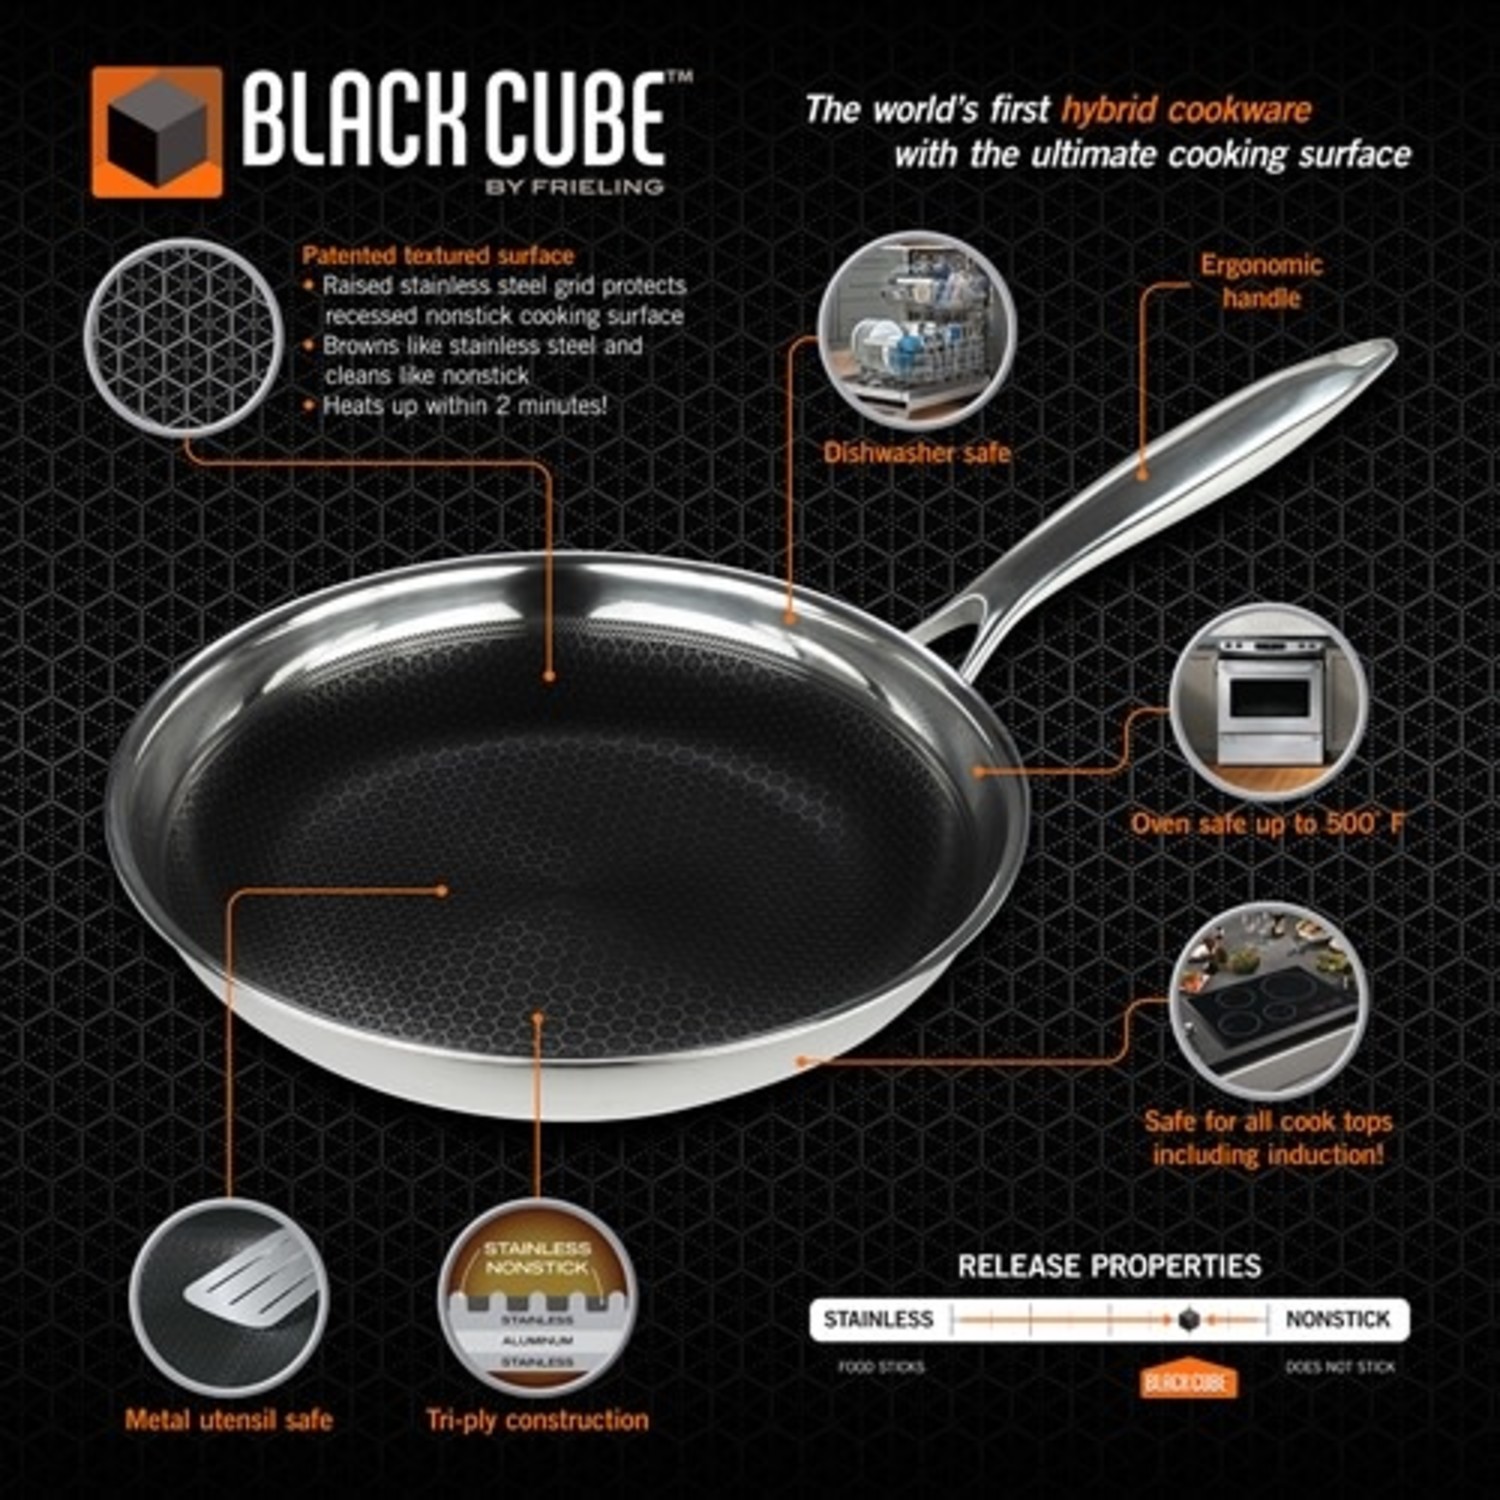 Black Cubeâ„¢ Quick Release Fry Pan, 8-inch Diameter